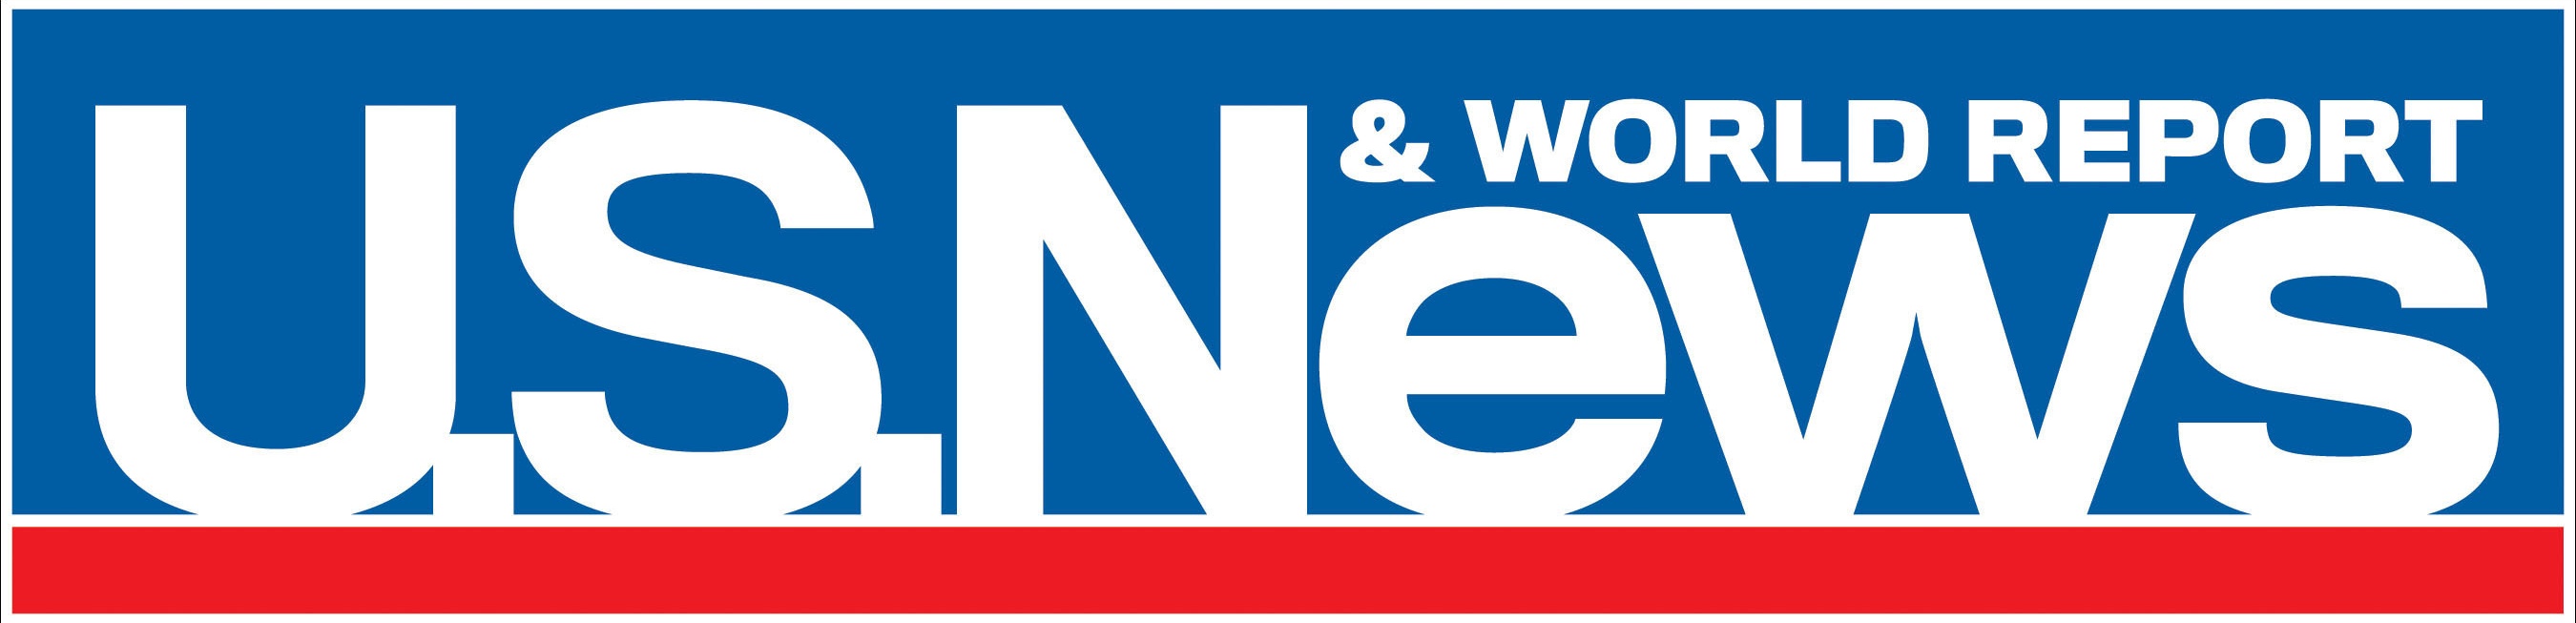 U.S. News and World Report logo. 